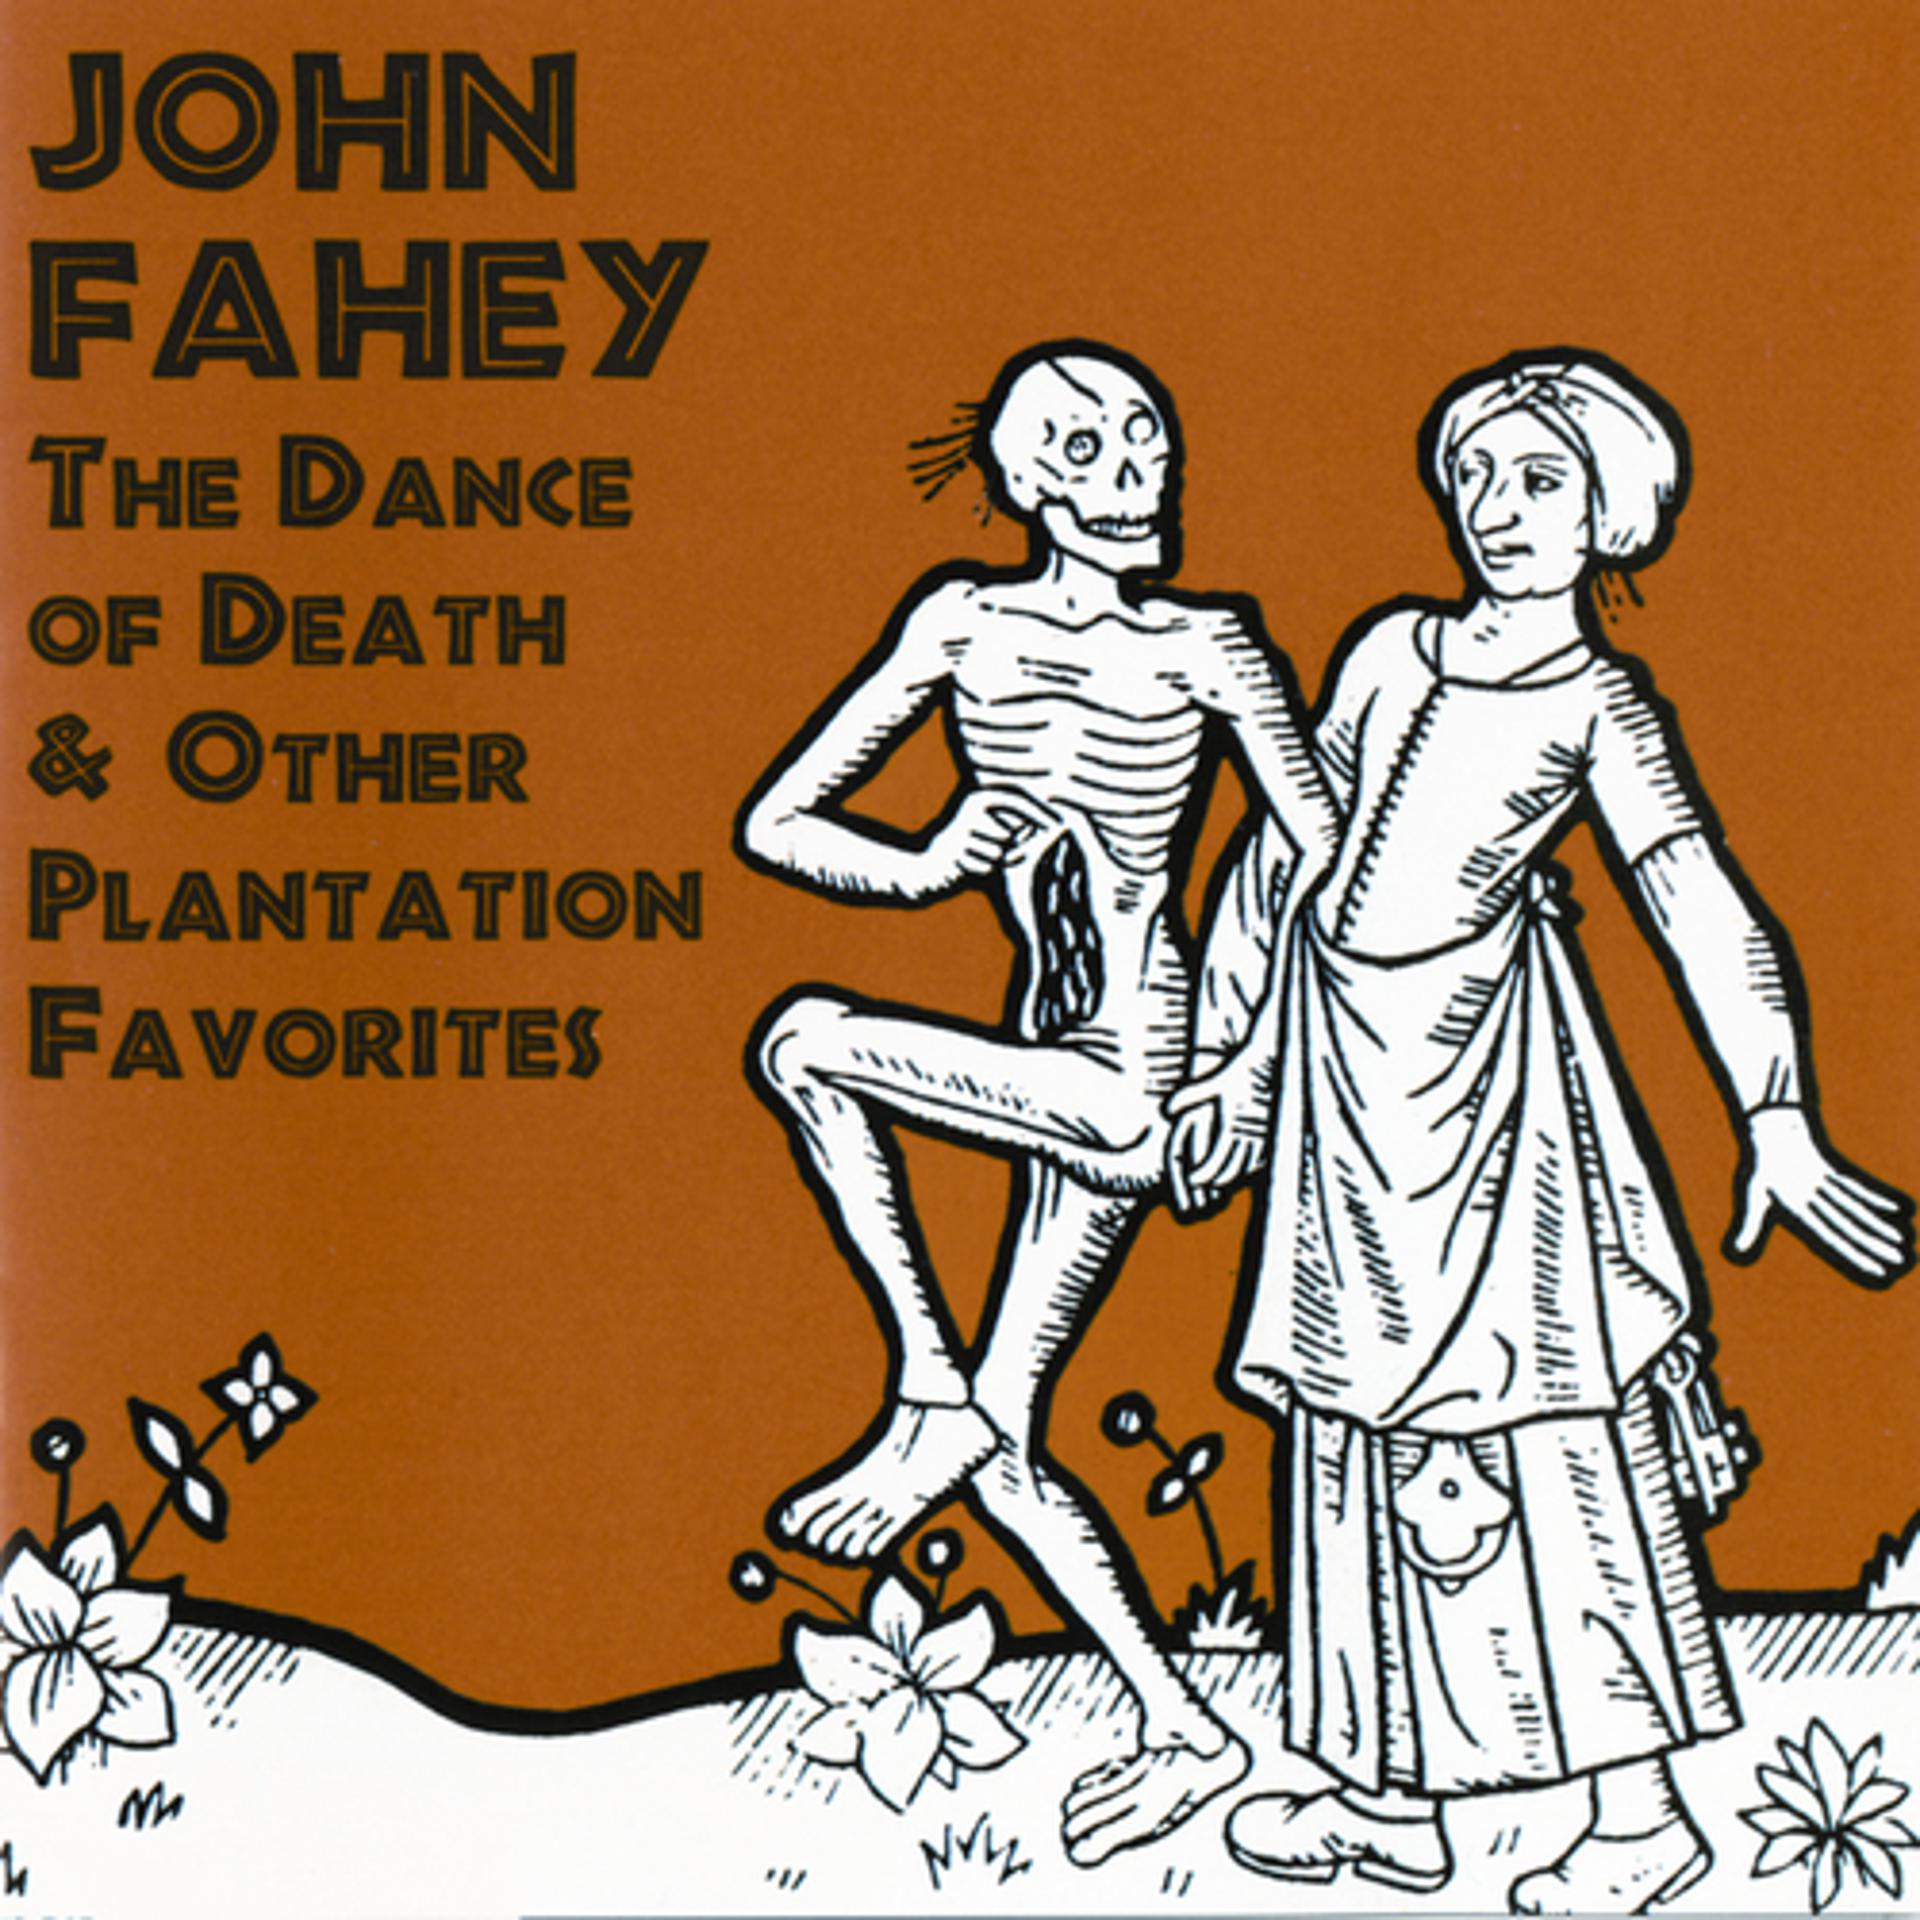 The other favorite. John Fahey. John Fahey album. John Fahey обложки альбомов. The Dance of Death.